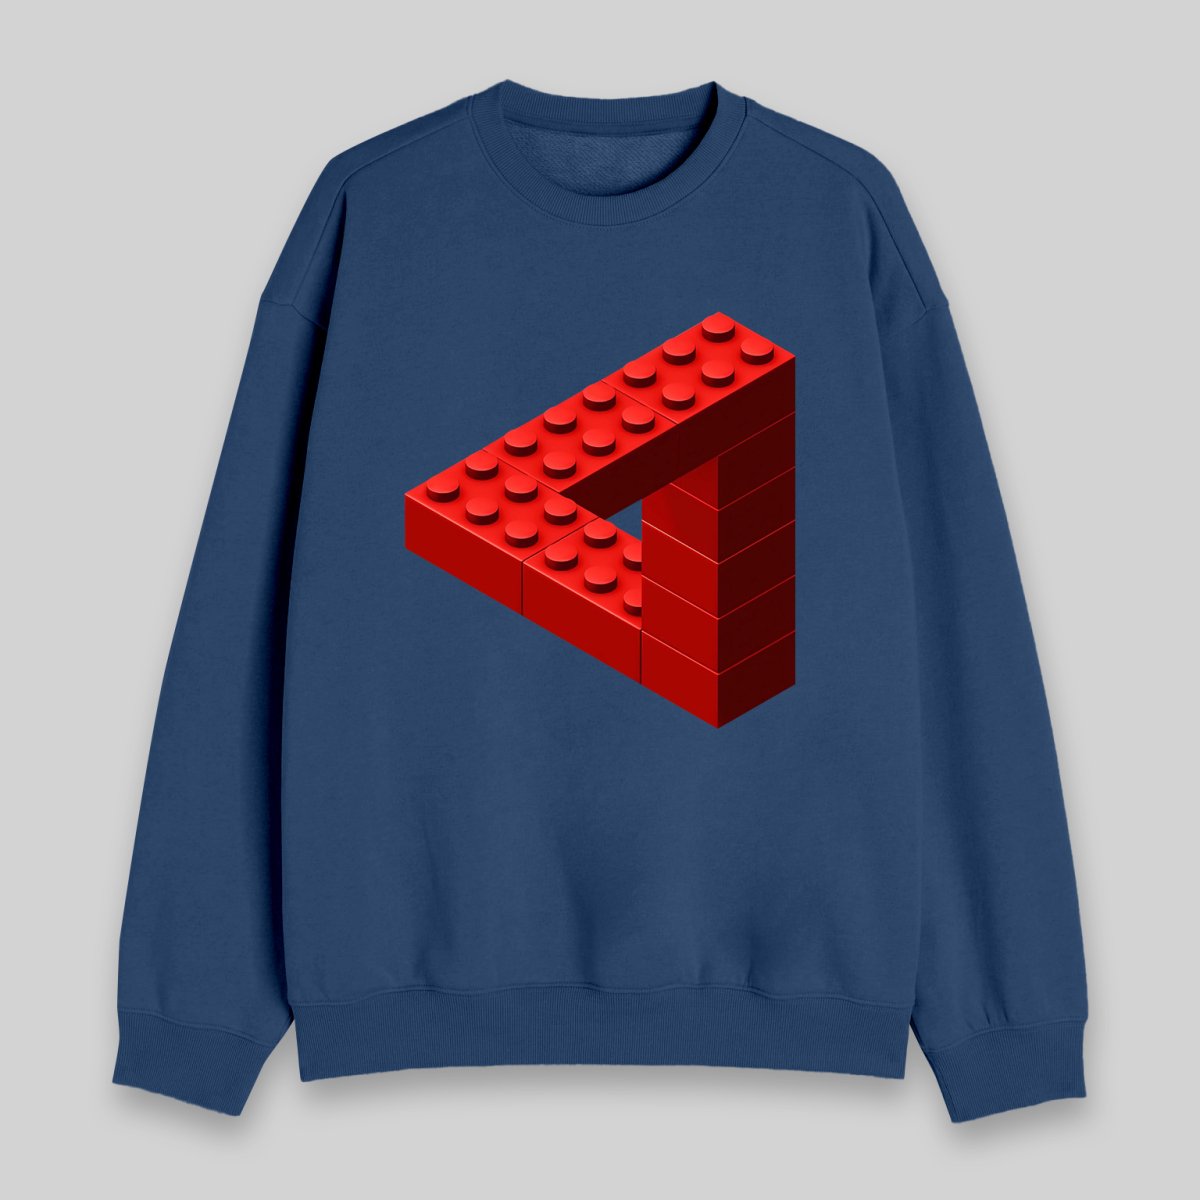 Escher Toy Bricks Sweatshirt - Geeksoutfit